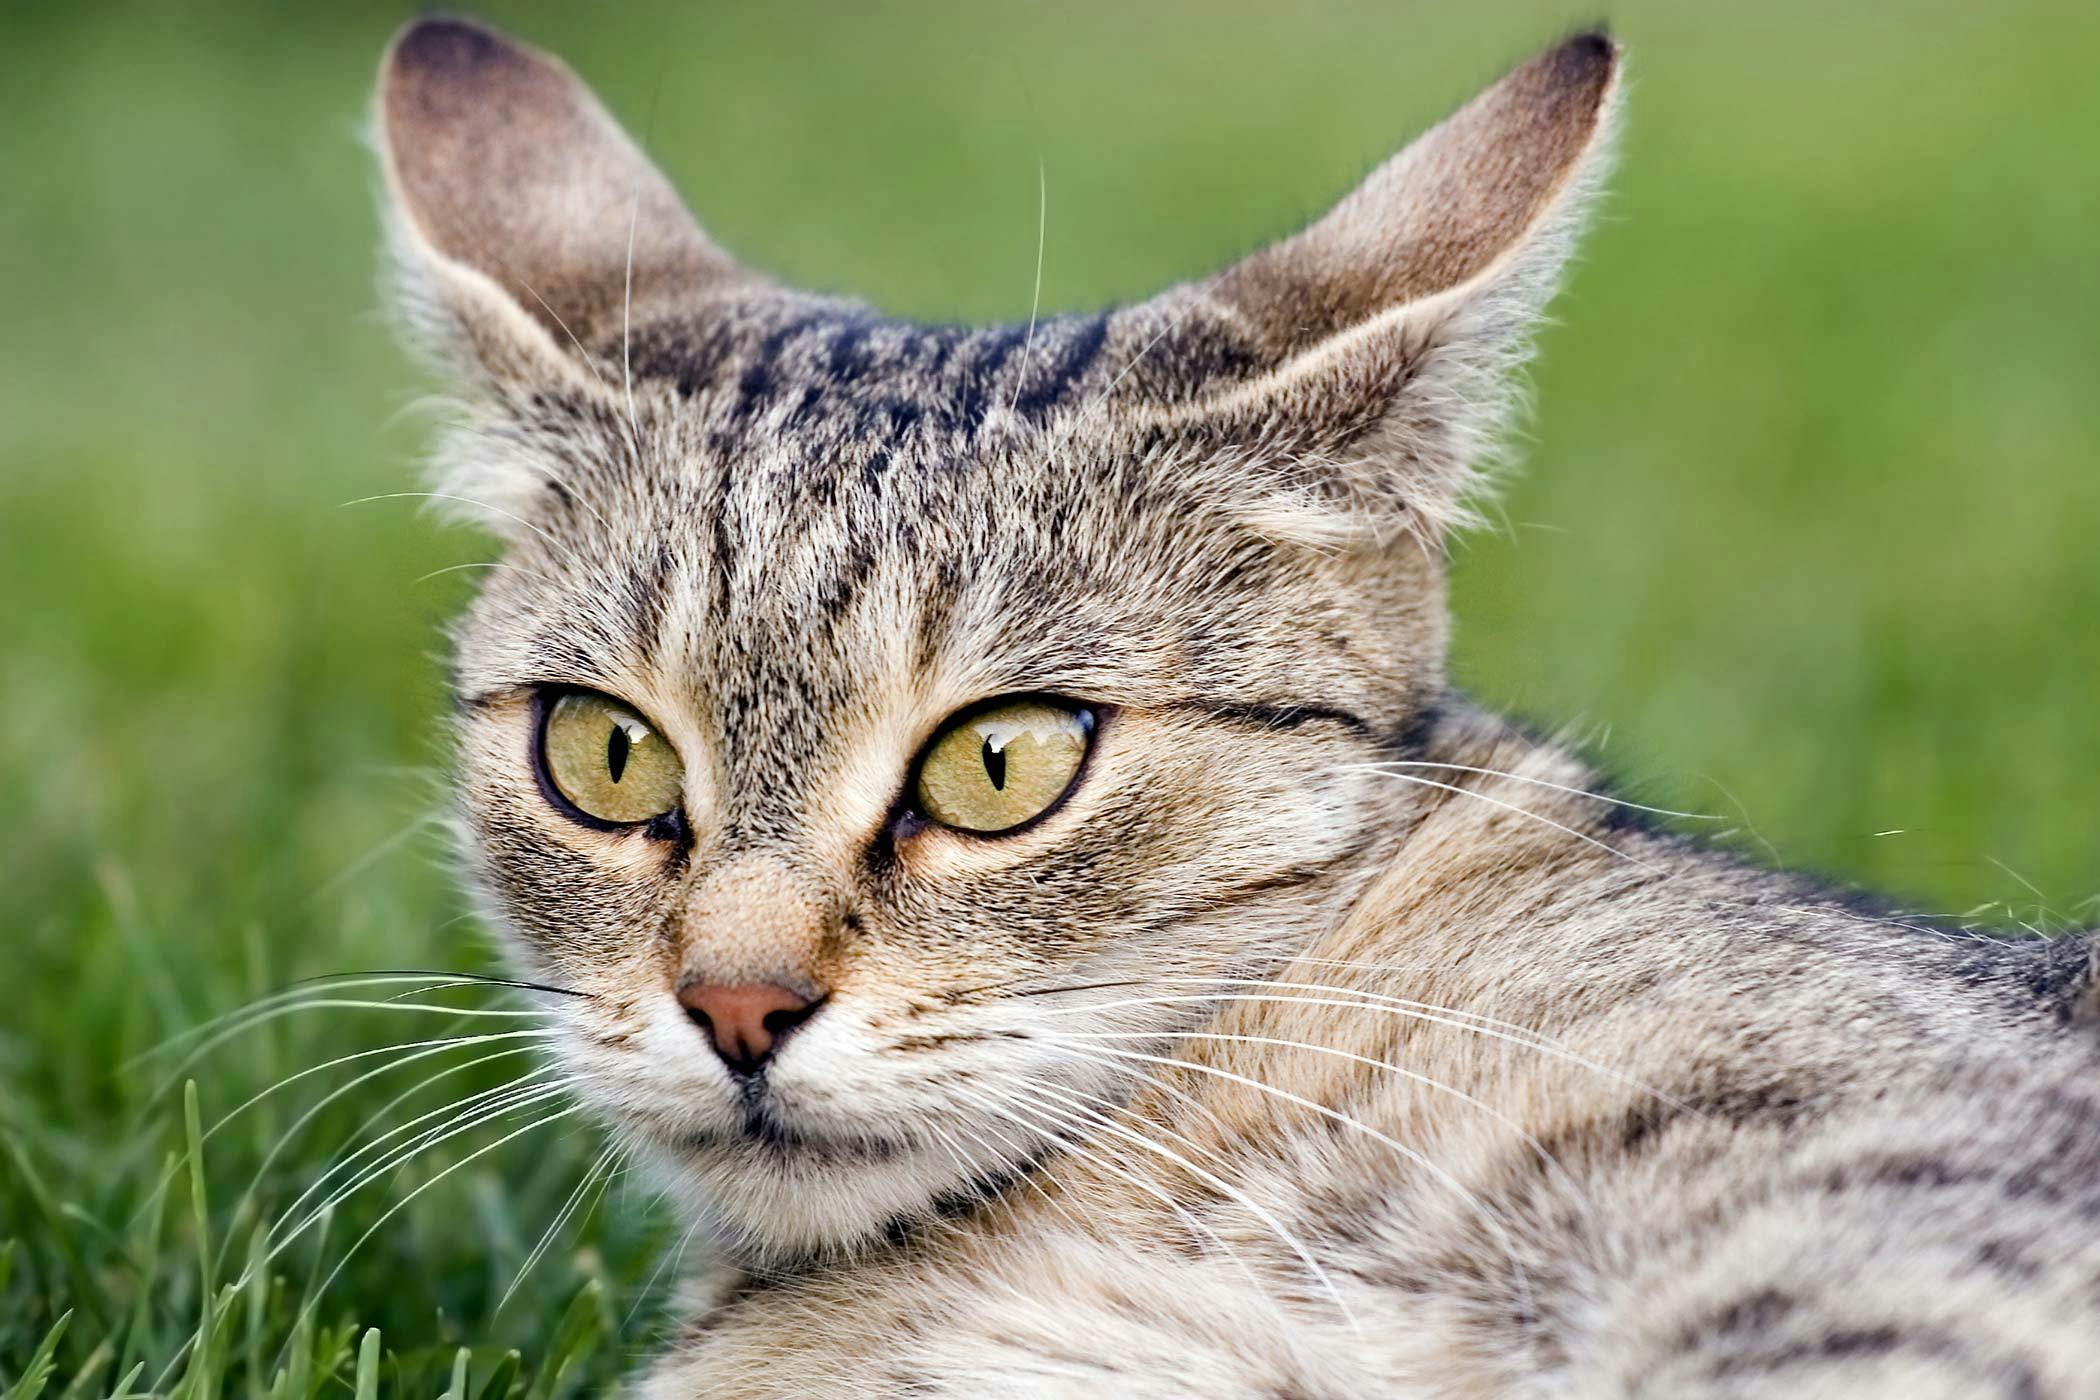 Encephalitis In Cats Causes toxoplasmosis